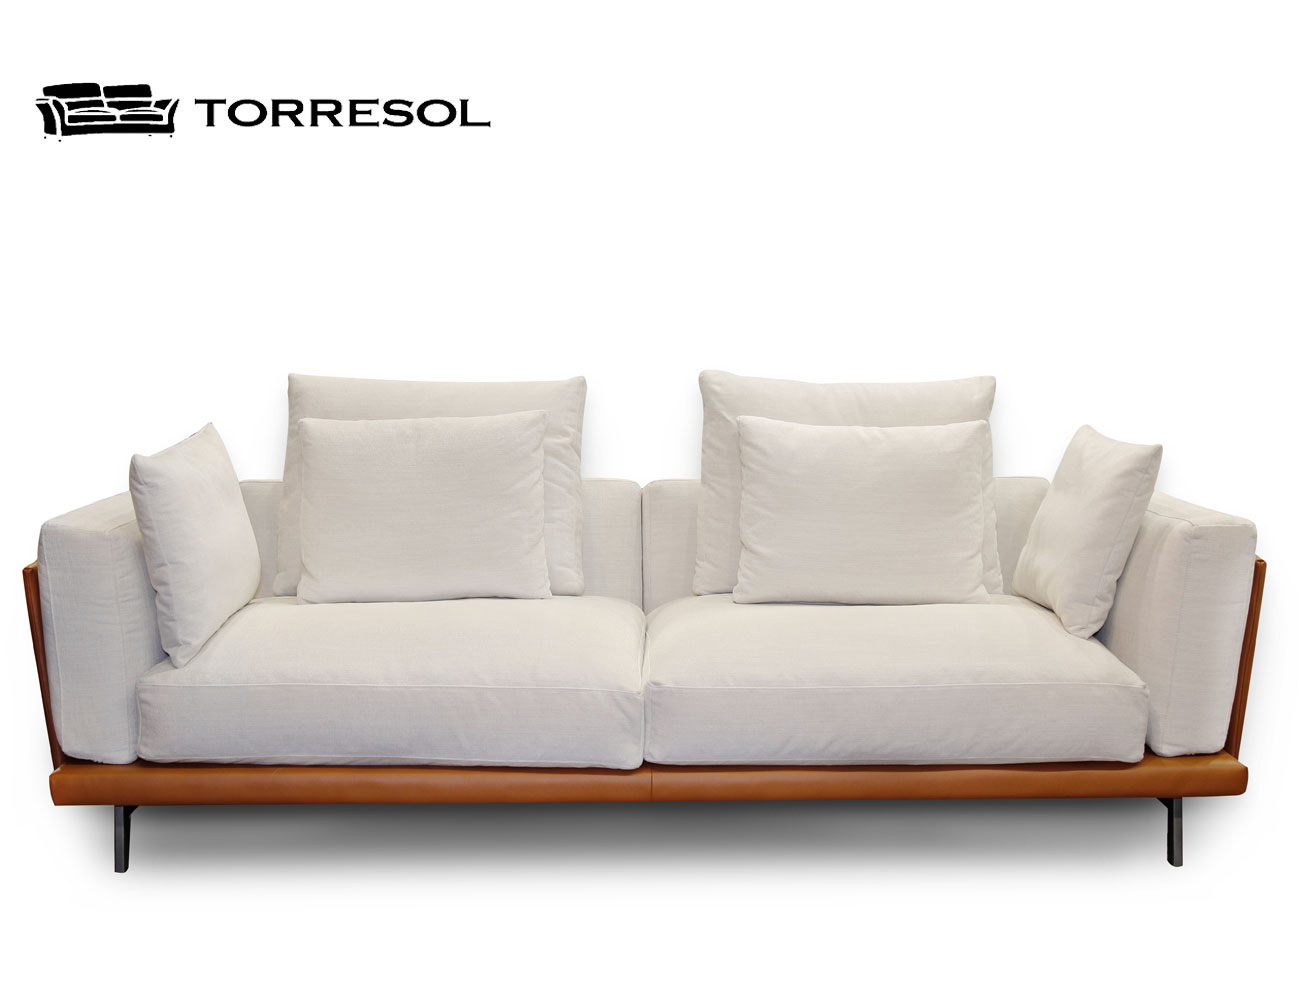 Sofa tango torresol